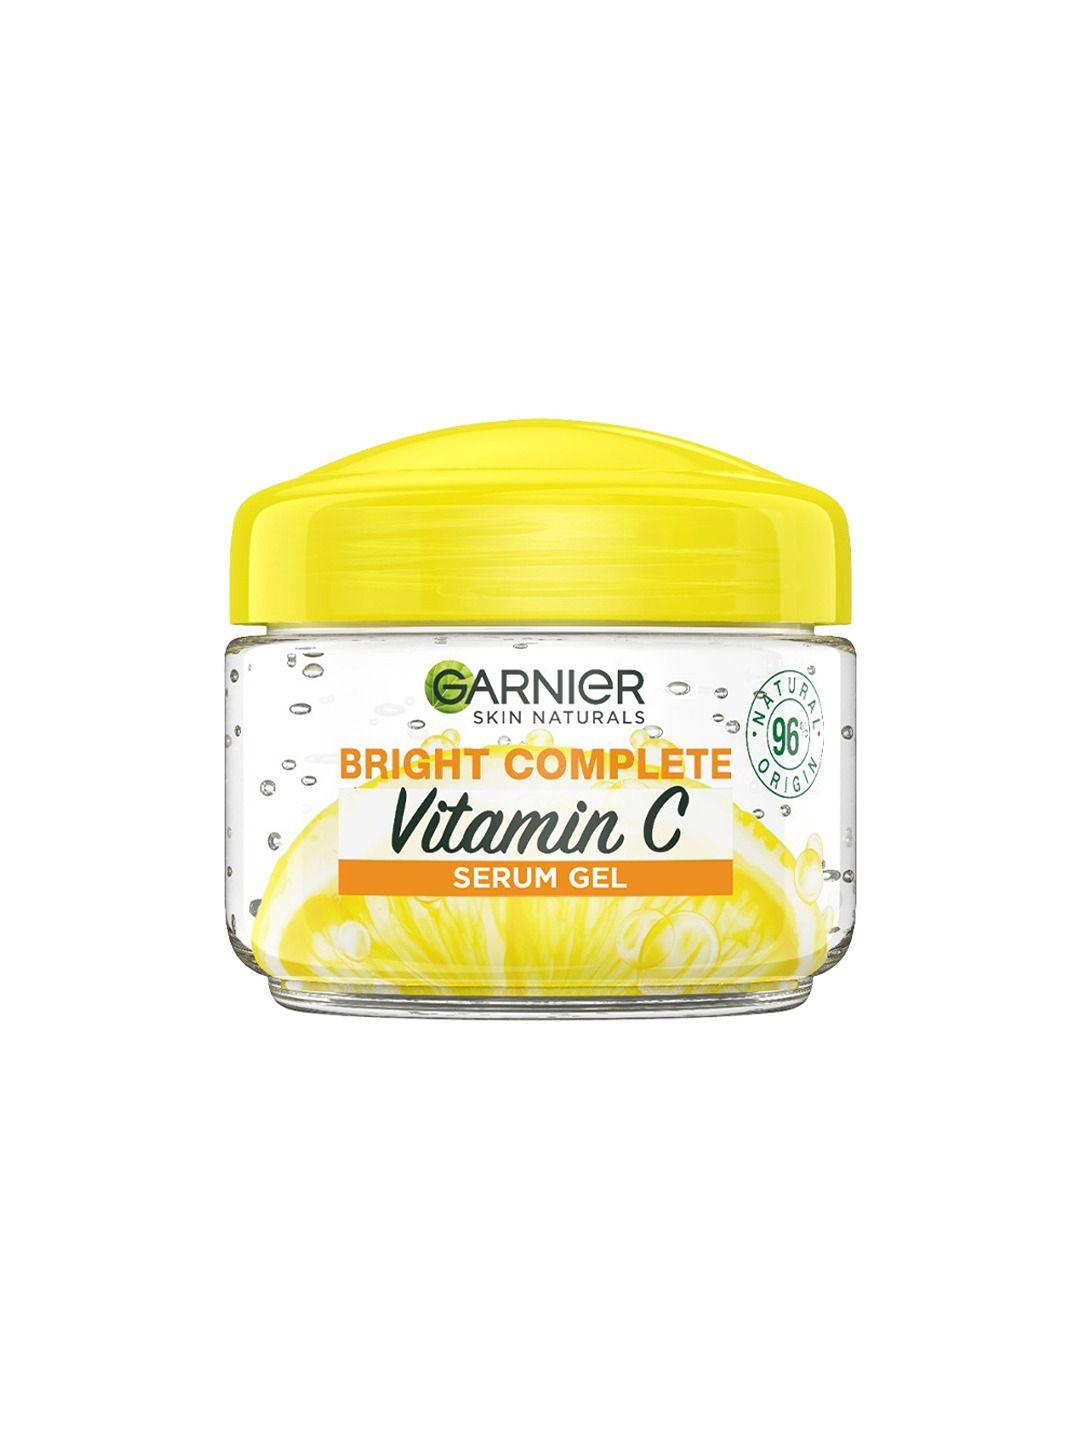 garnier bright complete vitamin c serum gel for instant brighter skin with lemon - 45g